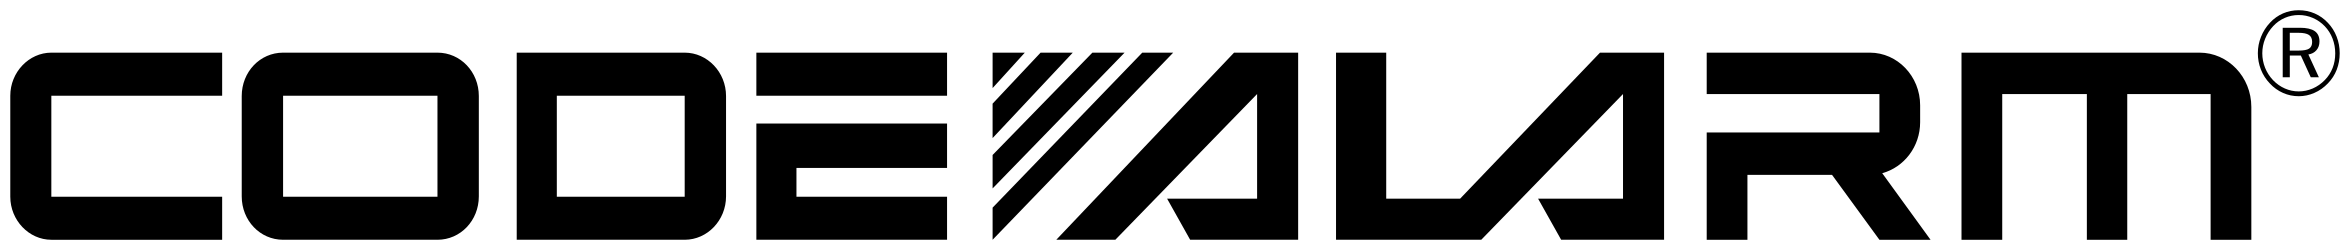 Code Alarm Logo Design PNG image